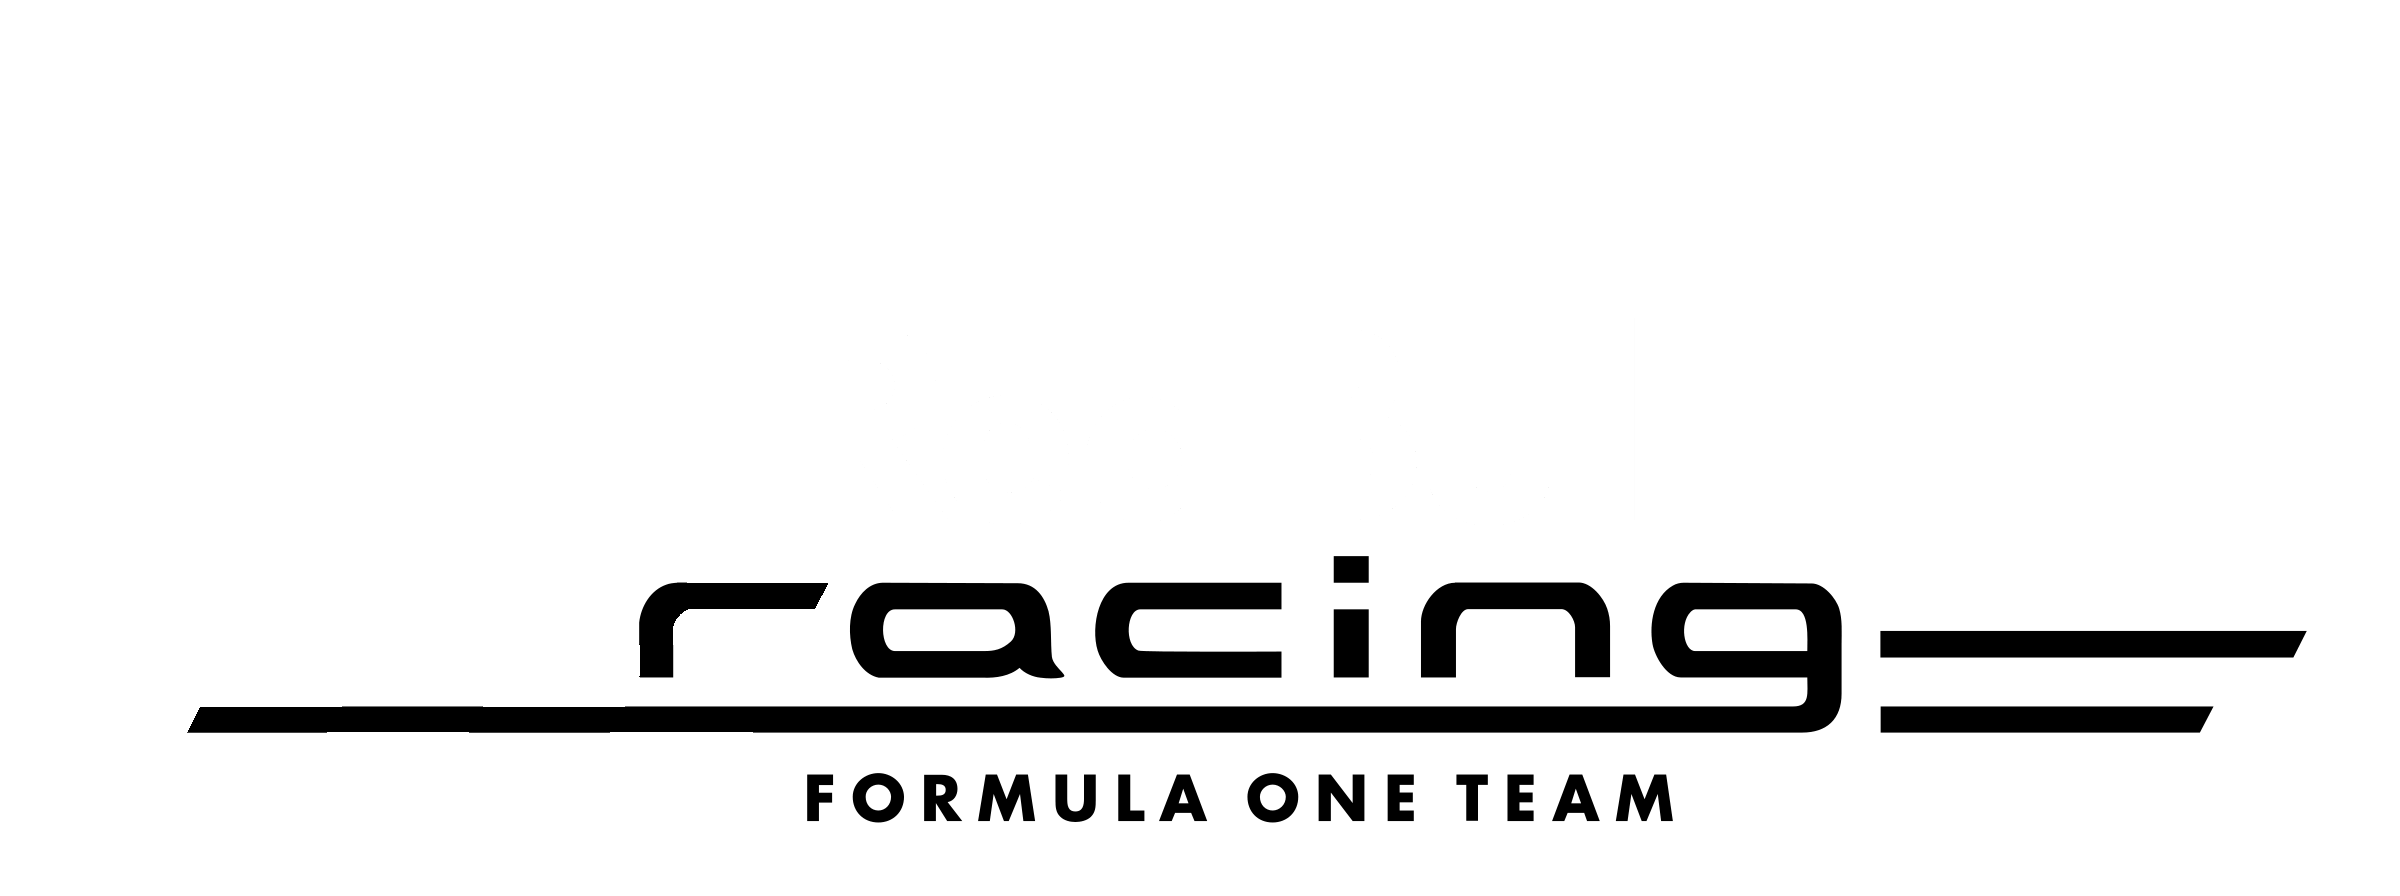 Red Bull Racing Logo - Red Bull Racing Formula One Team Logo PNG Transparent & SVG Vector ...